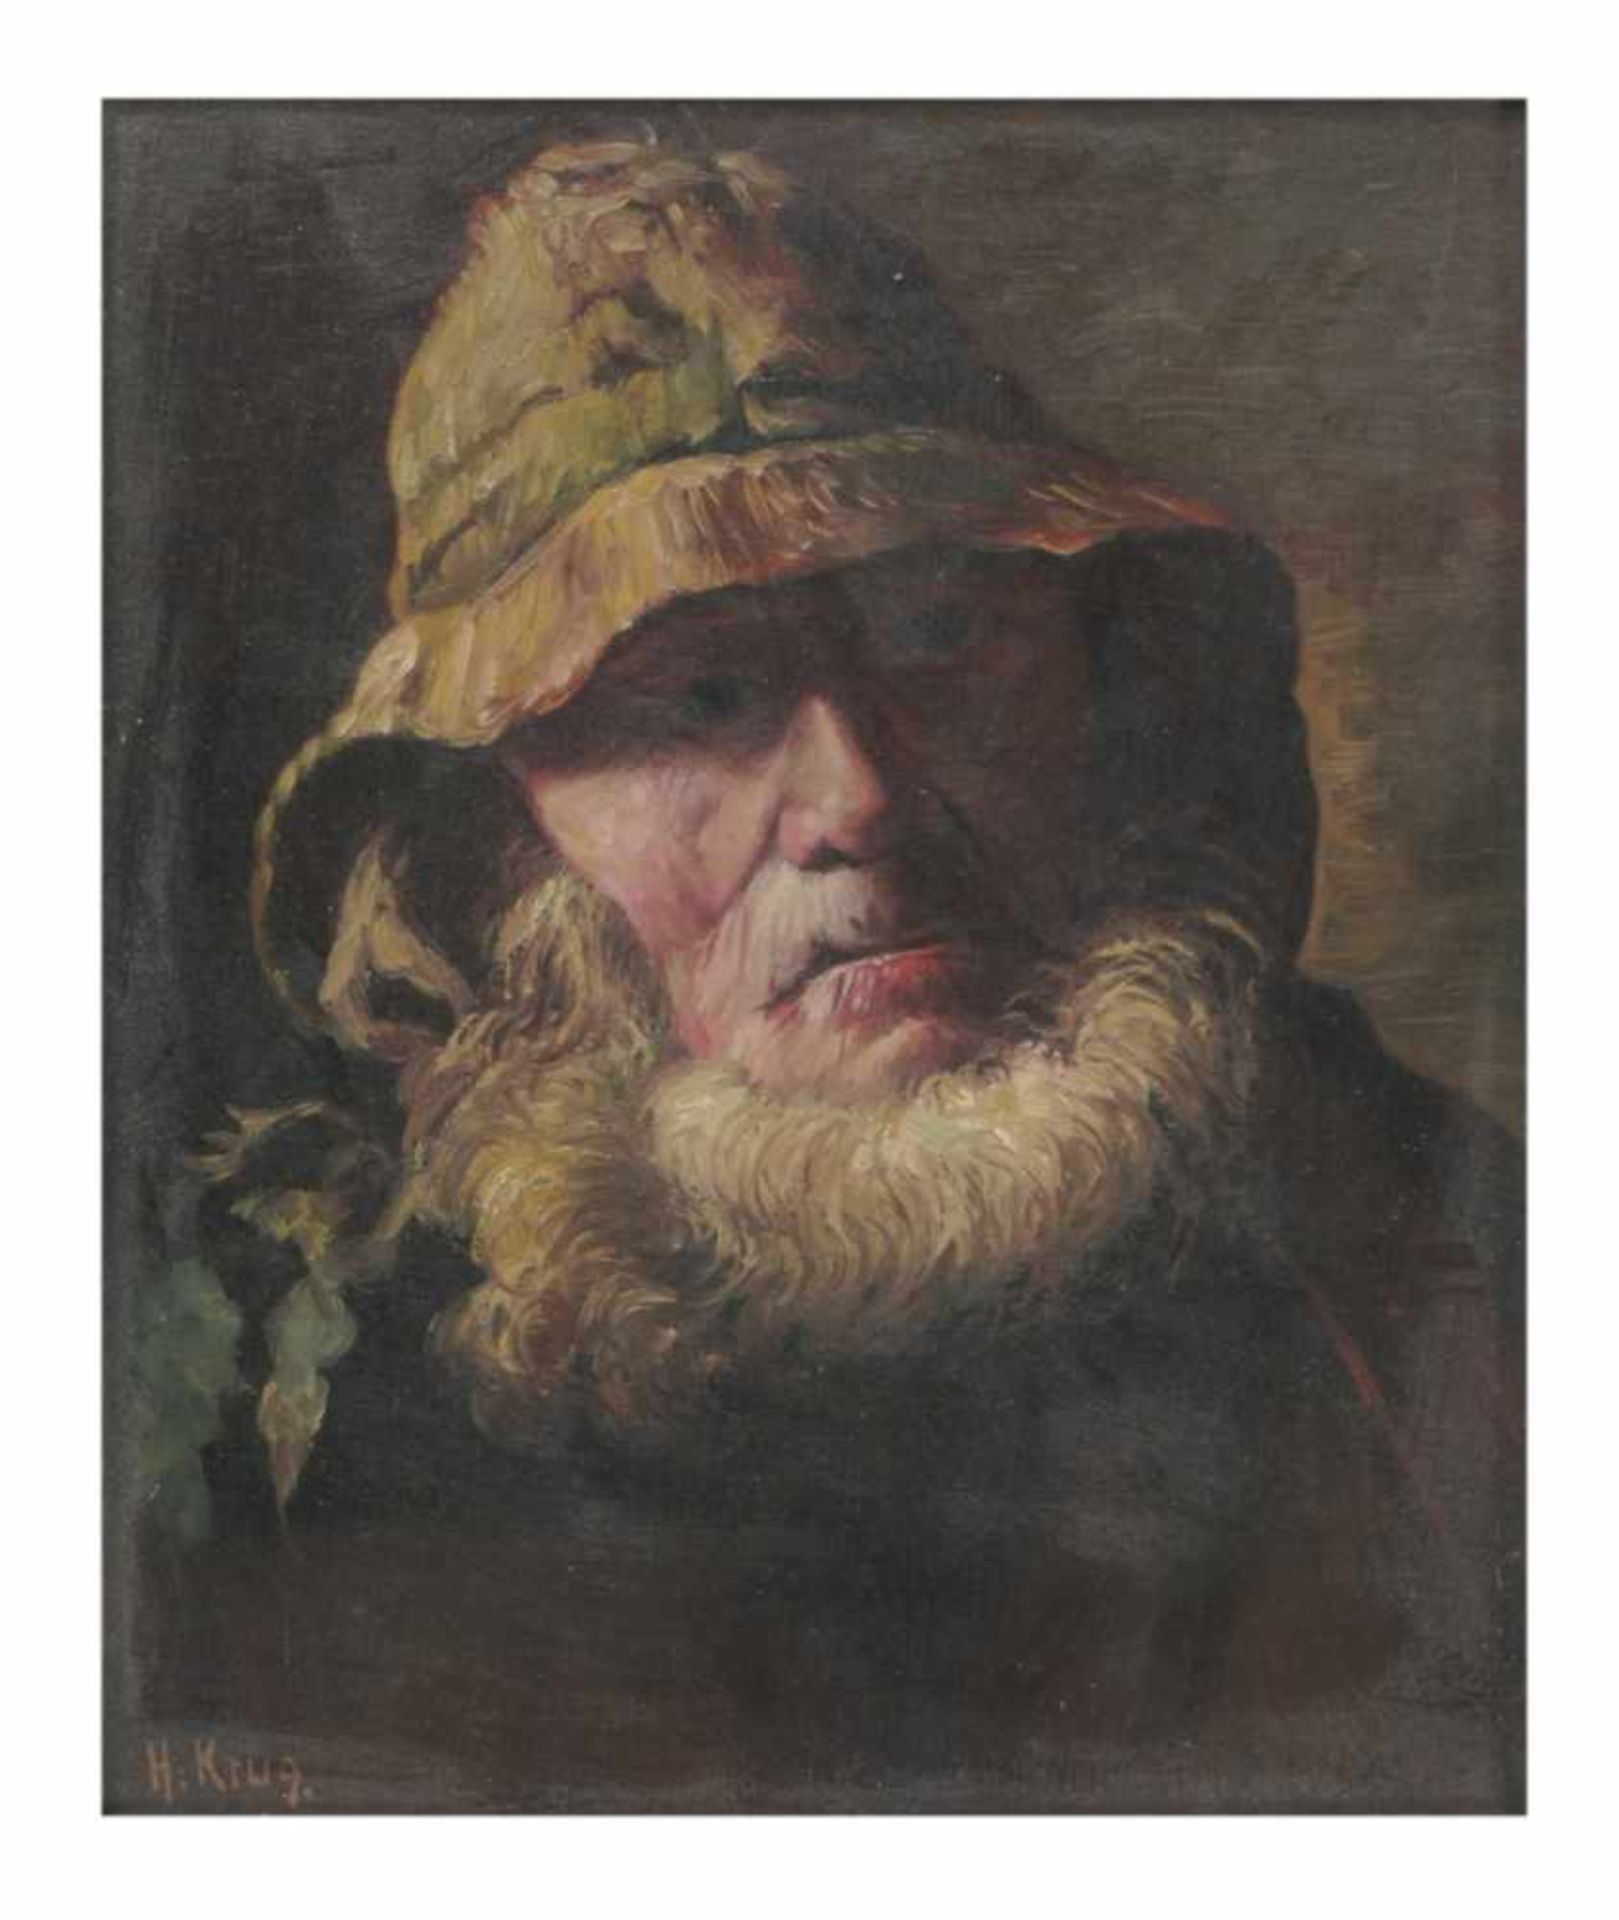 H. Krug, Character Head, Oil on canvas, signed, 30 x 25 cm, frame: 47 x 38 cm